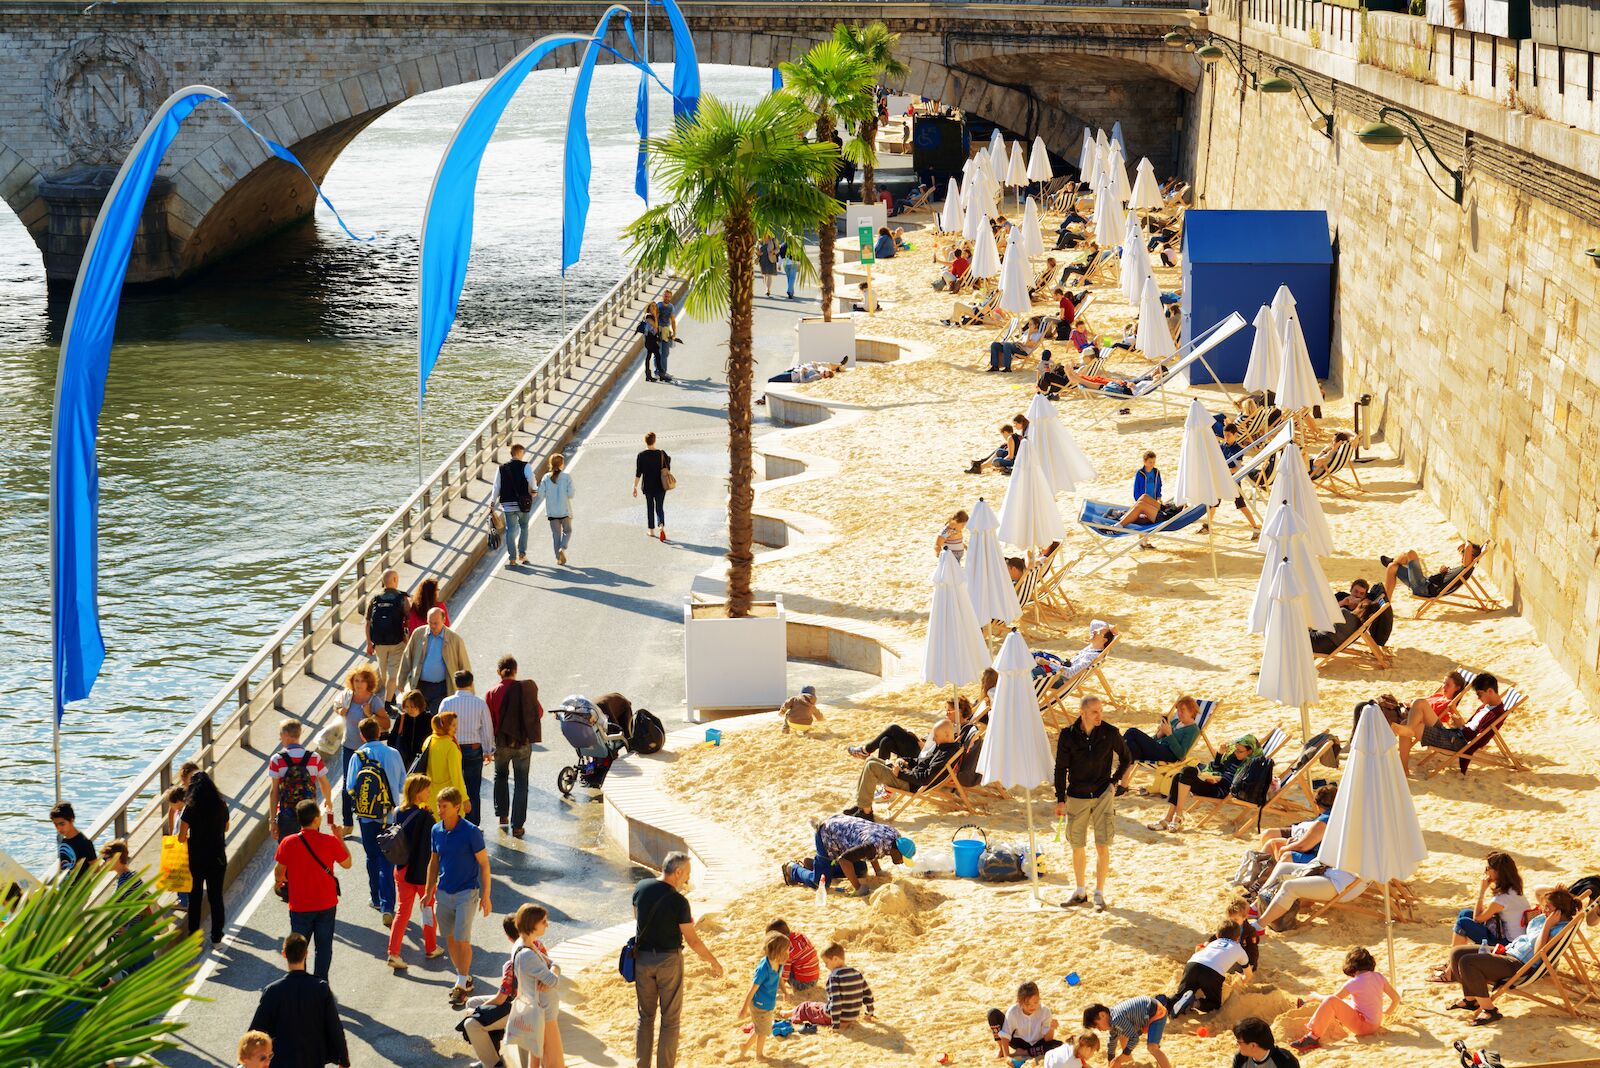 Paris Plage - the beaches set up along the banks of the Seine river in Paris